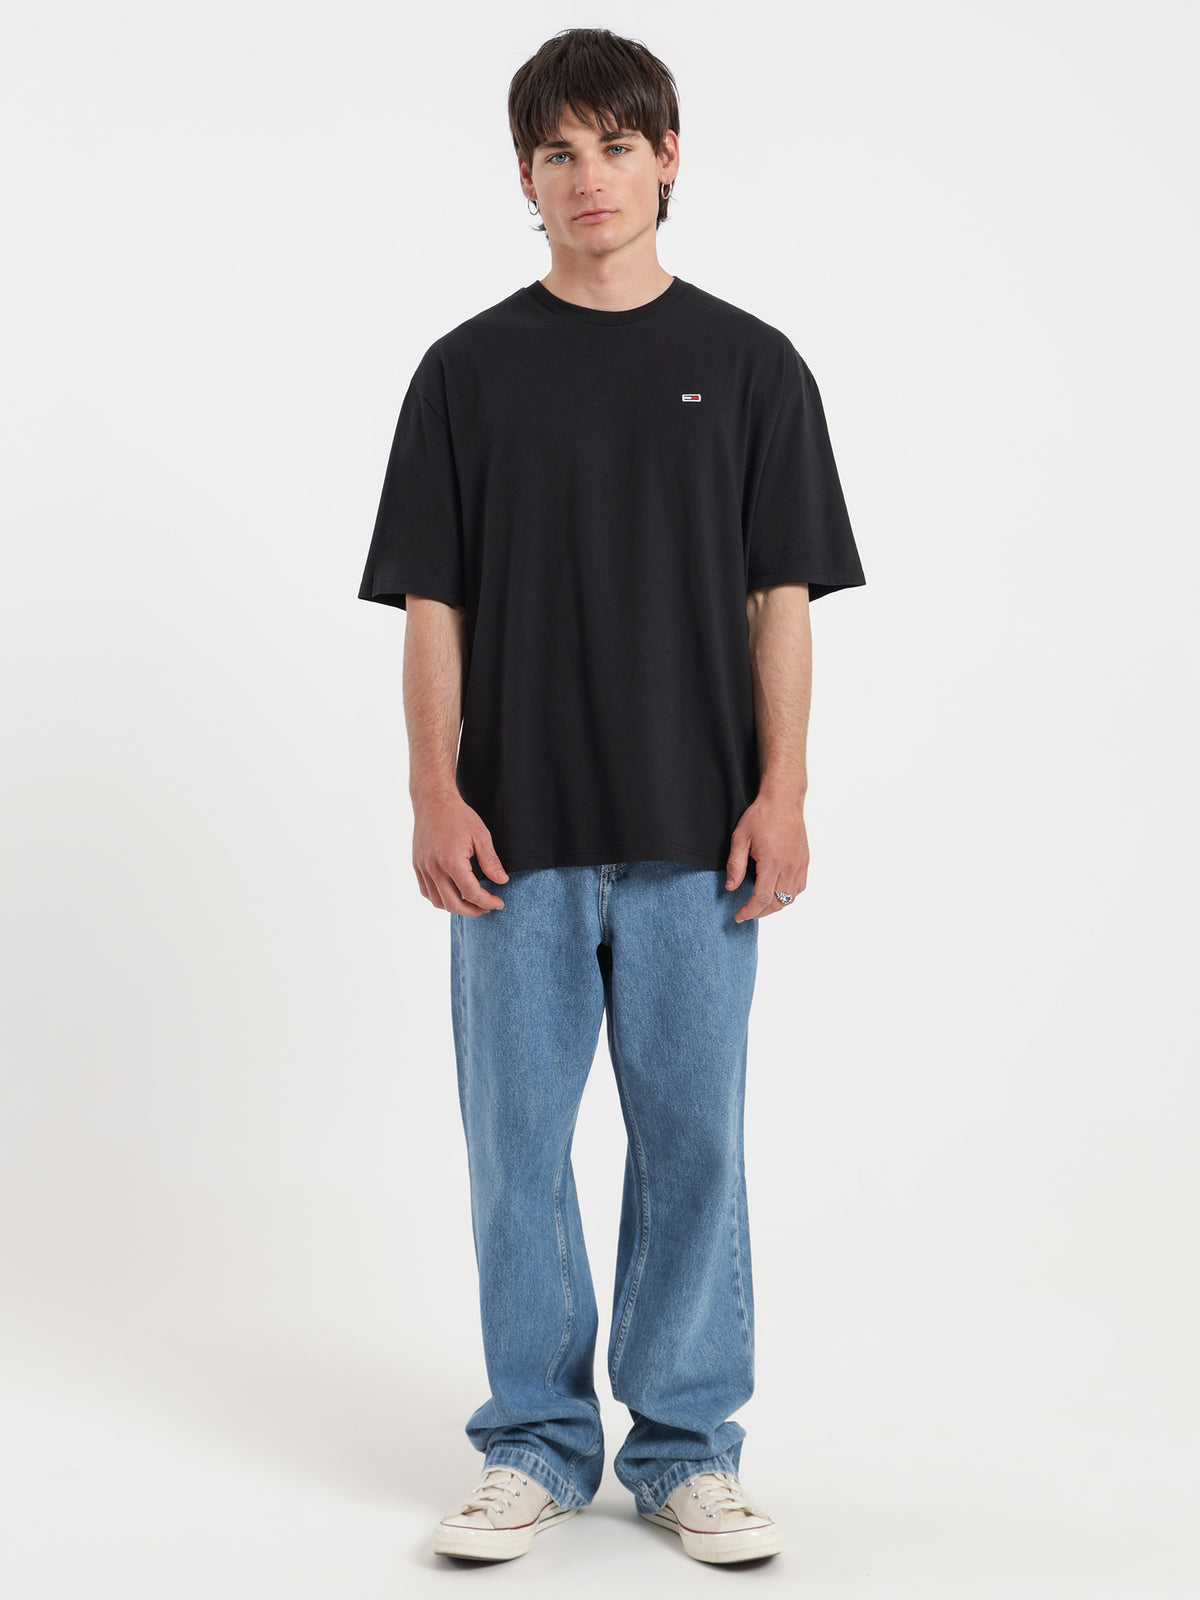 Essential Crew Neck Skate T-Shirt in Black